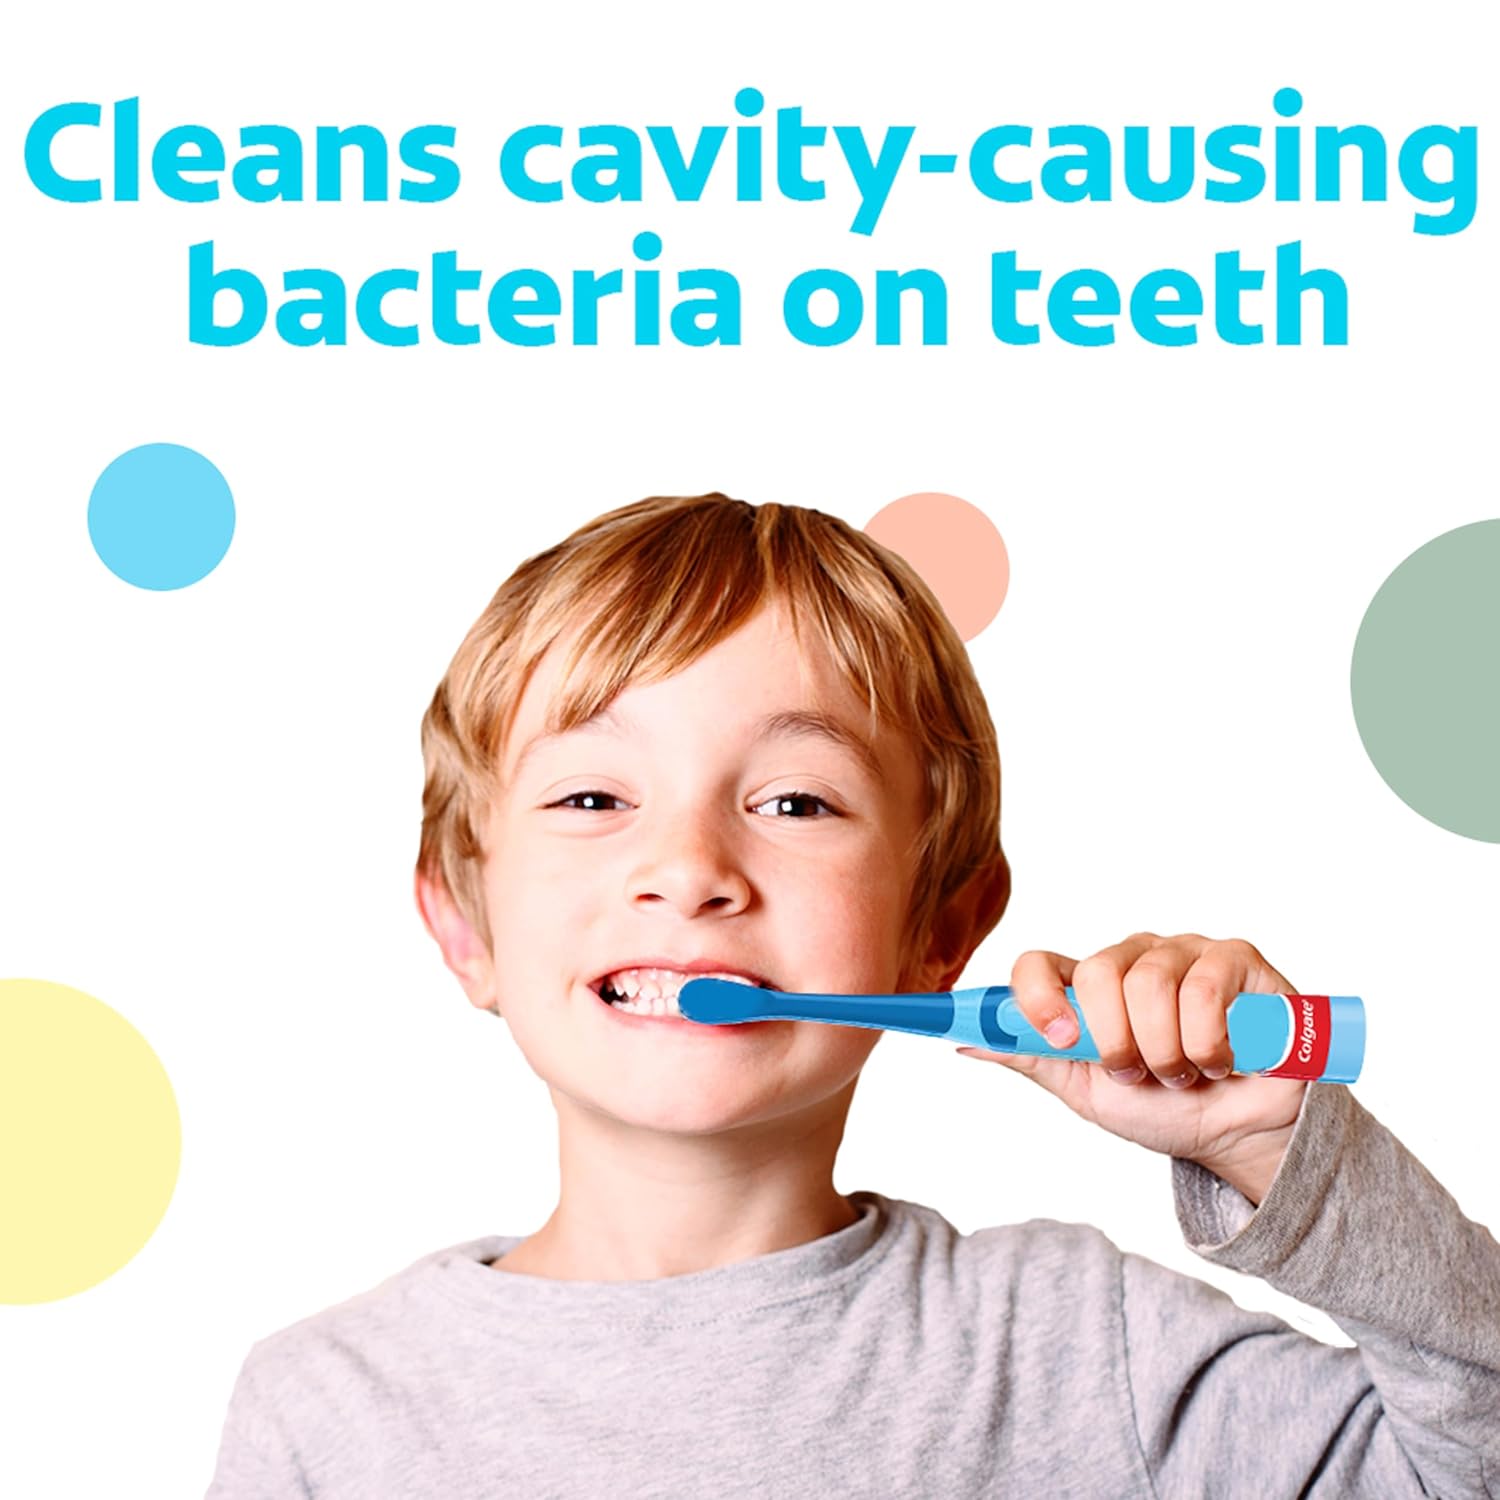 Colgate Kids Battery Powered Toothbrush - Bluey